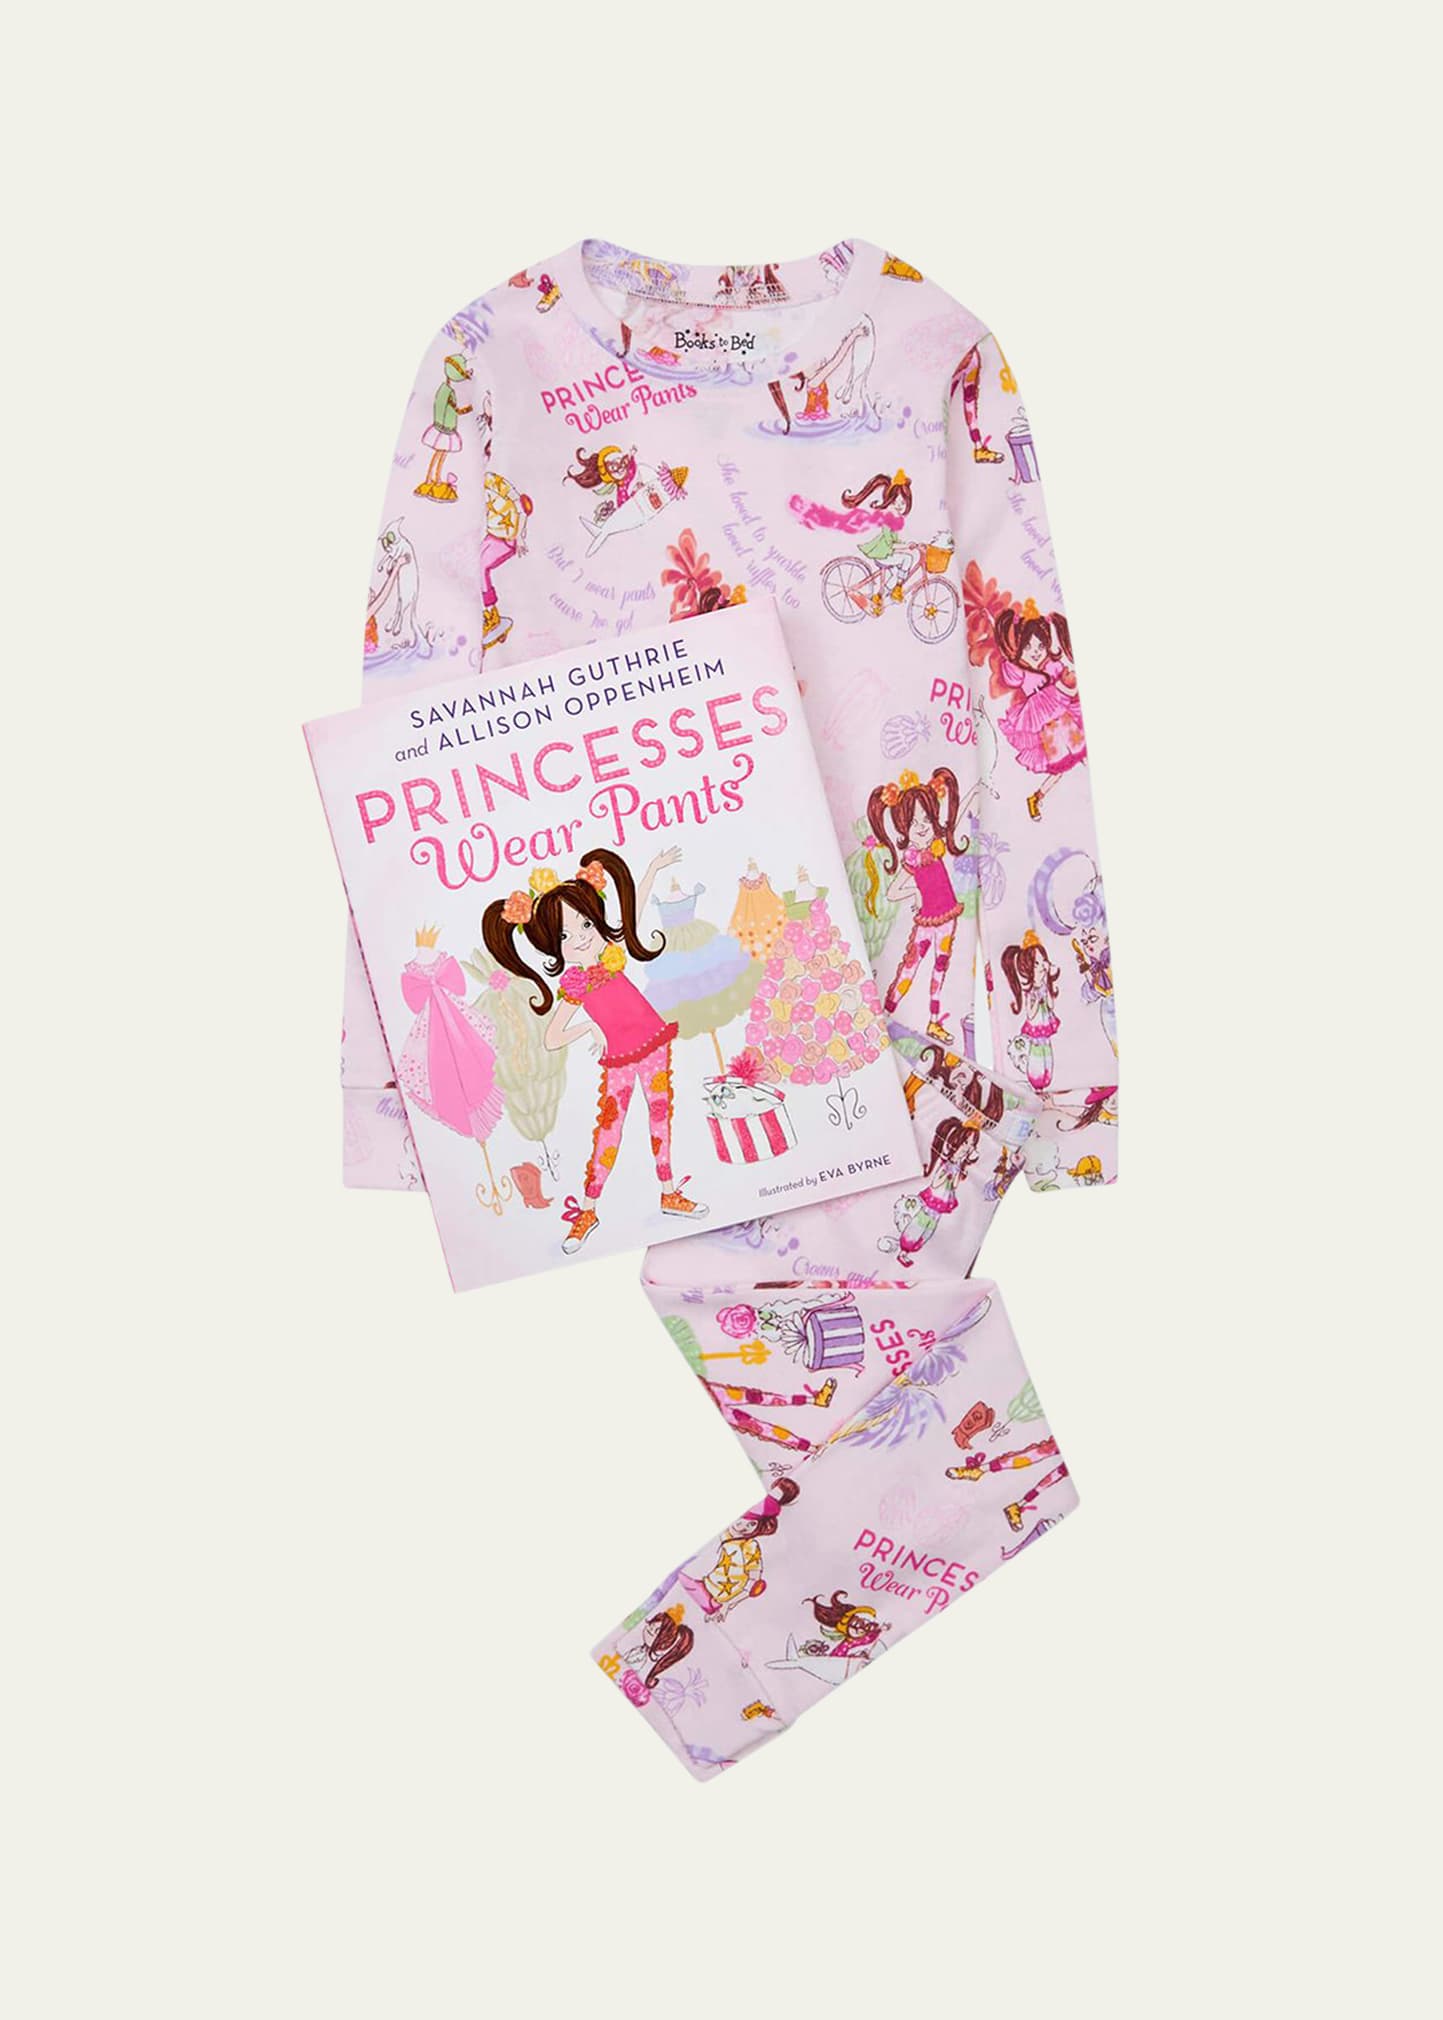 Books To Bed Kid's Princesses Wear Pants Printed Pajama Gift Set, Size 2-7